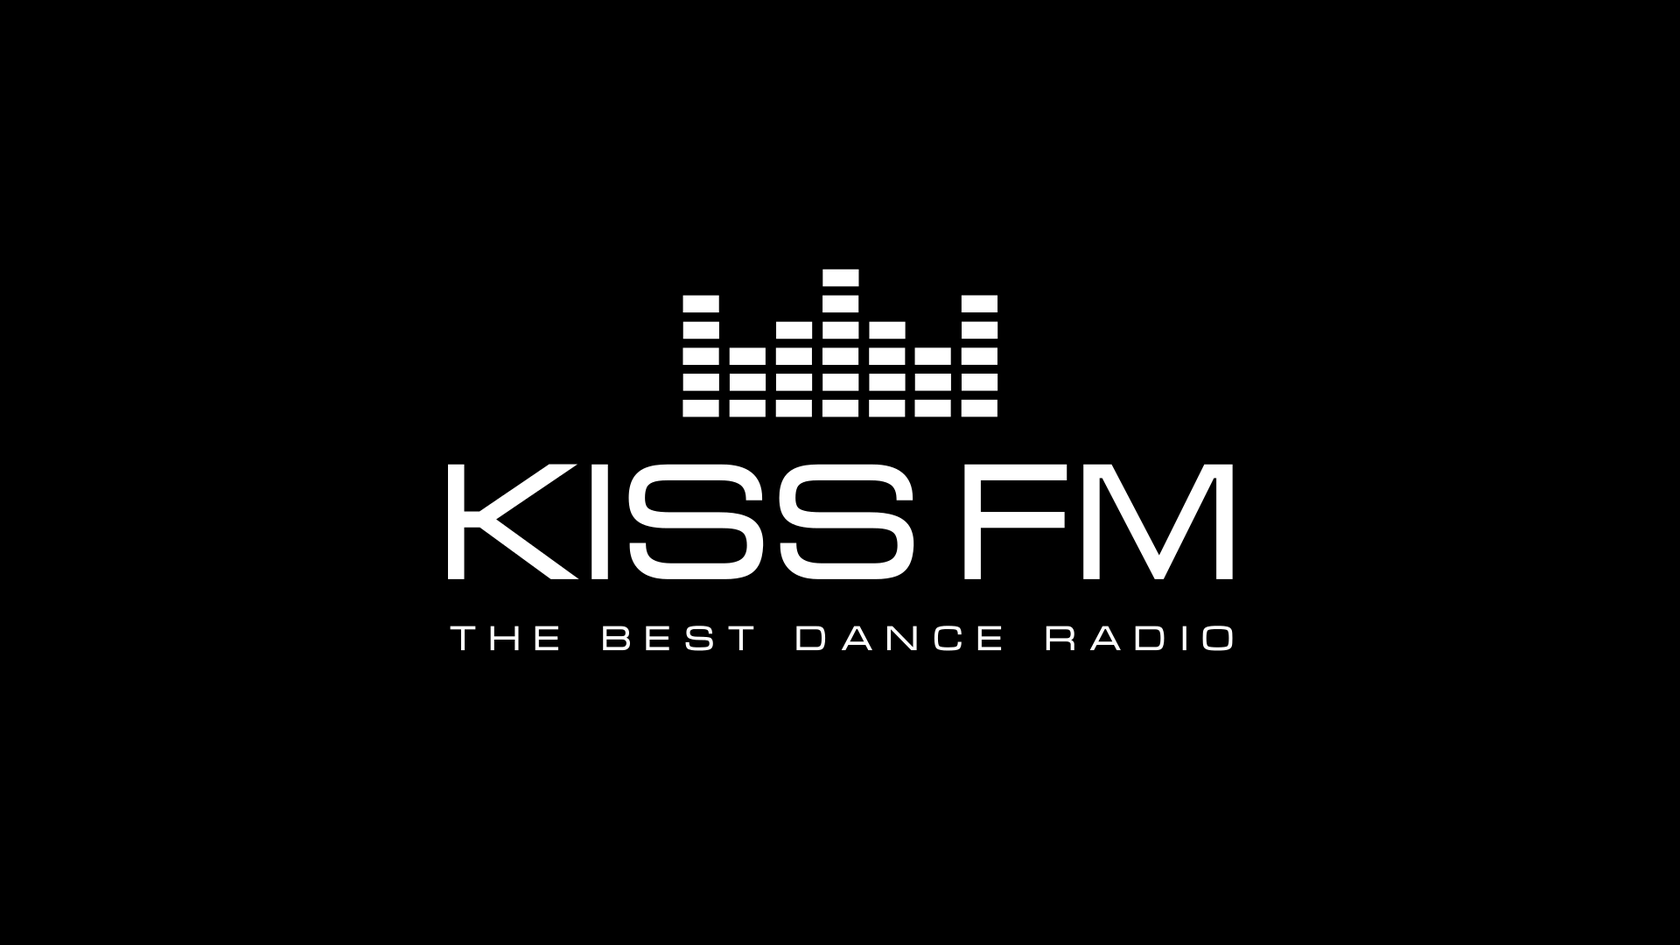 Душевное радио прямой эфир. Kiss fm. Kiss fm Ukraine. Kiss fm logo. Заставка Кисс ФМ.